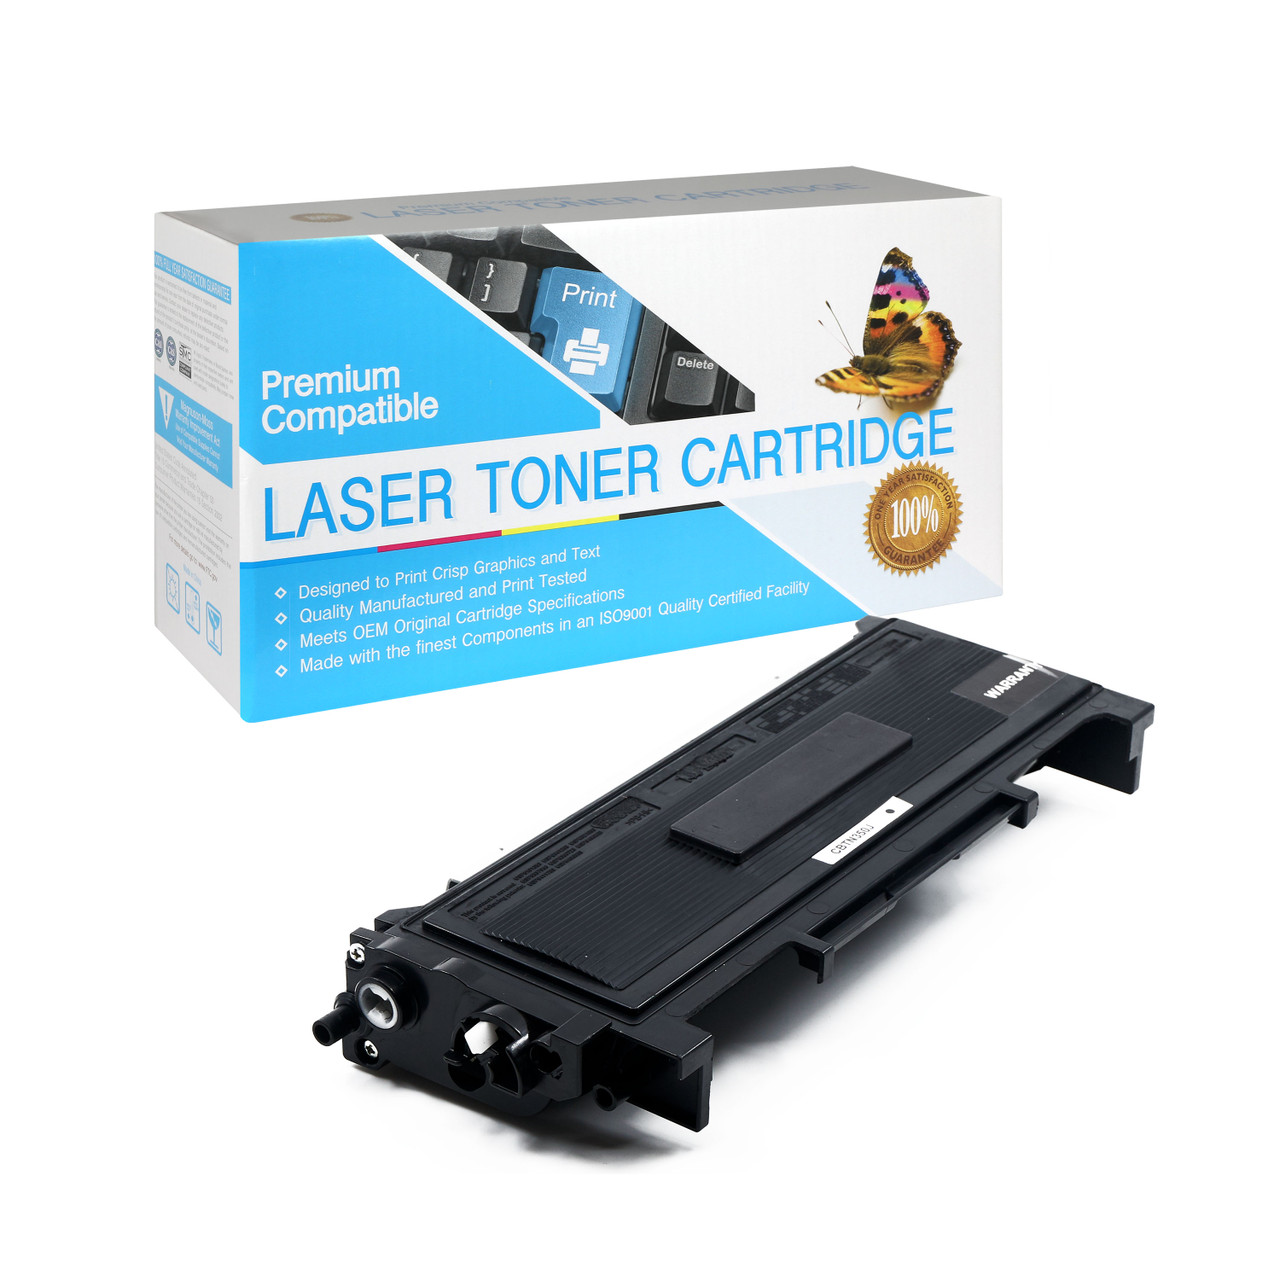 Toner Cartridge Fits Brother TN2000 TN350 DCP7010 HL2070 MFC7420 7820N Printer 